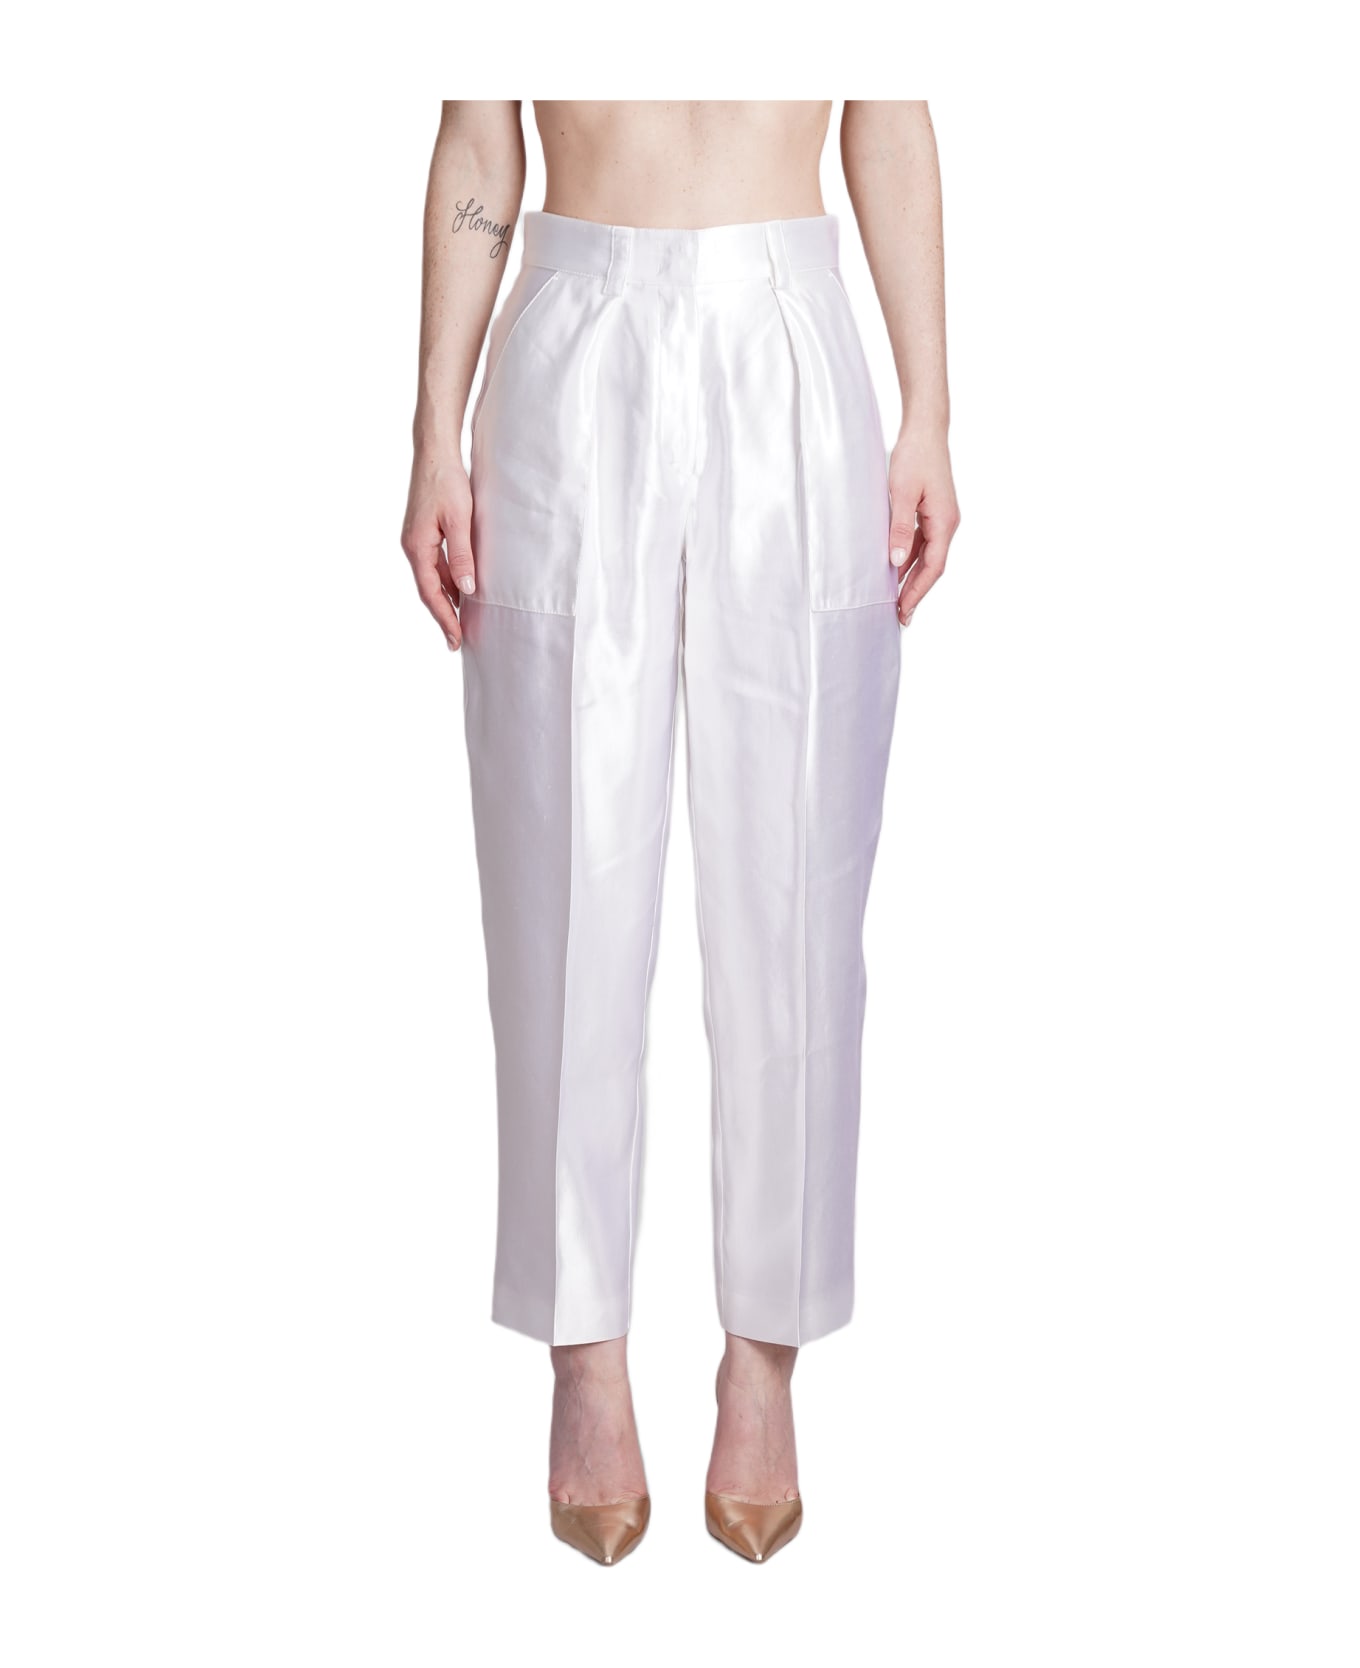 Giorgio Armani Pants In White Linen - white